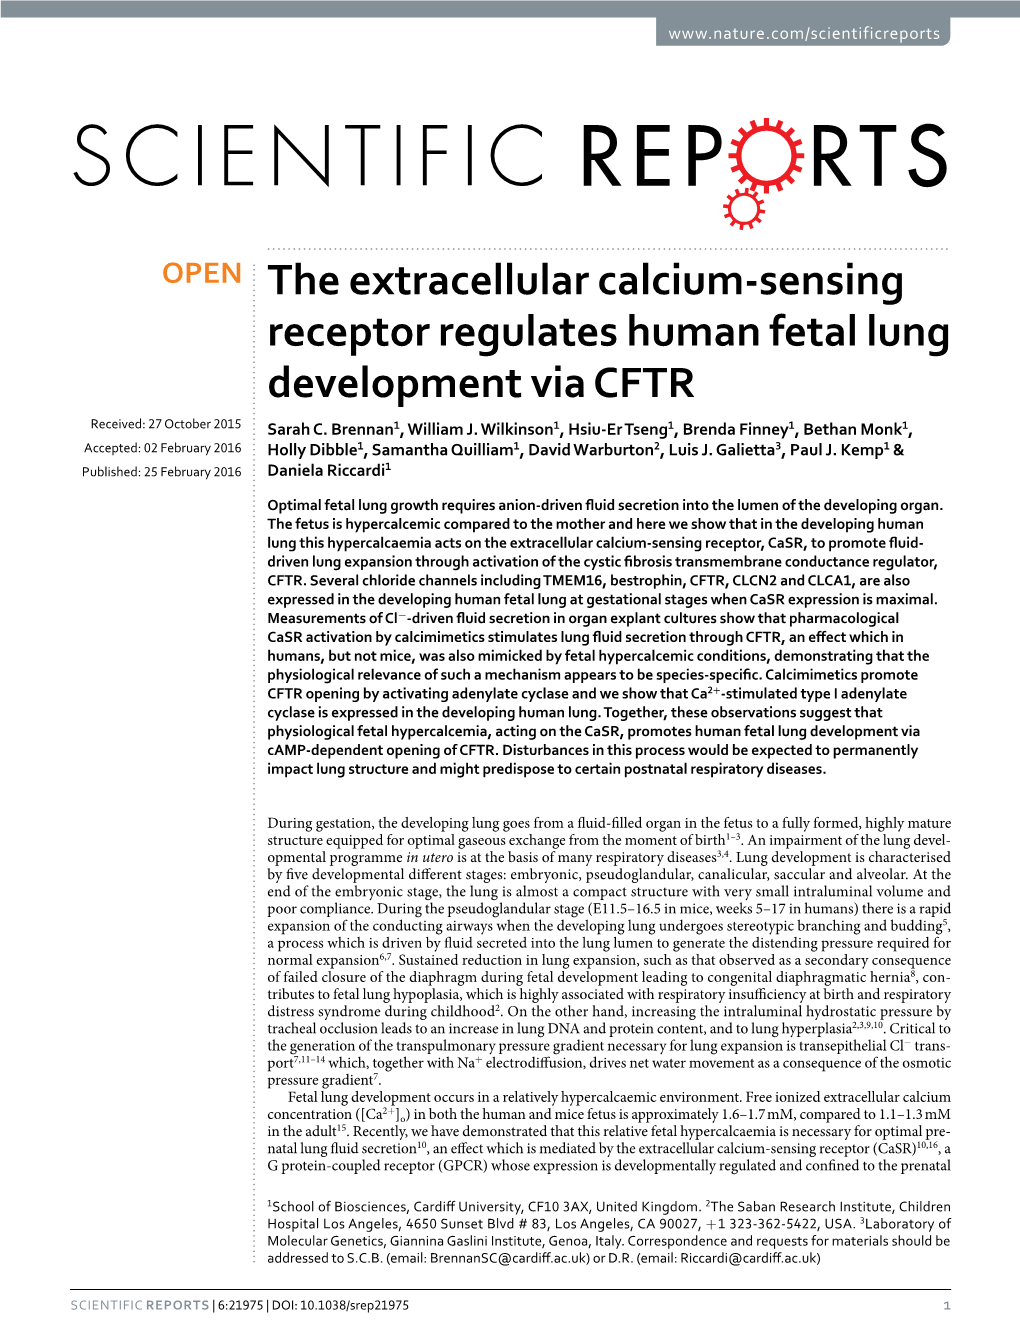 The Extracellular Calcium-Sensing Receptor Regulates Human Fetal Lung Development Via CFTR Received: 27 October 2015 Sarah C